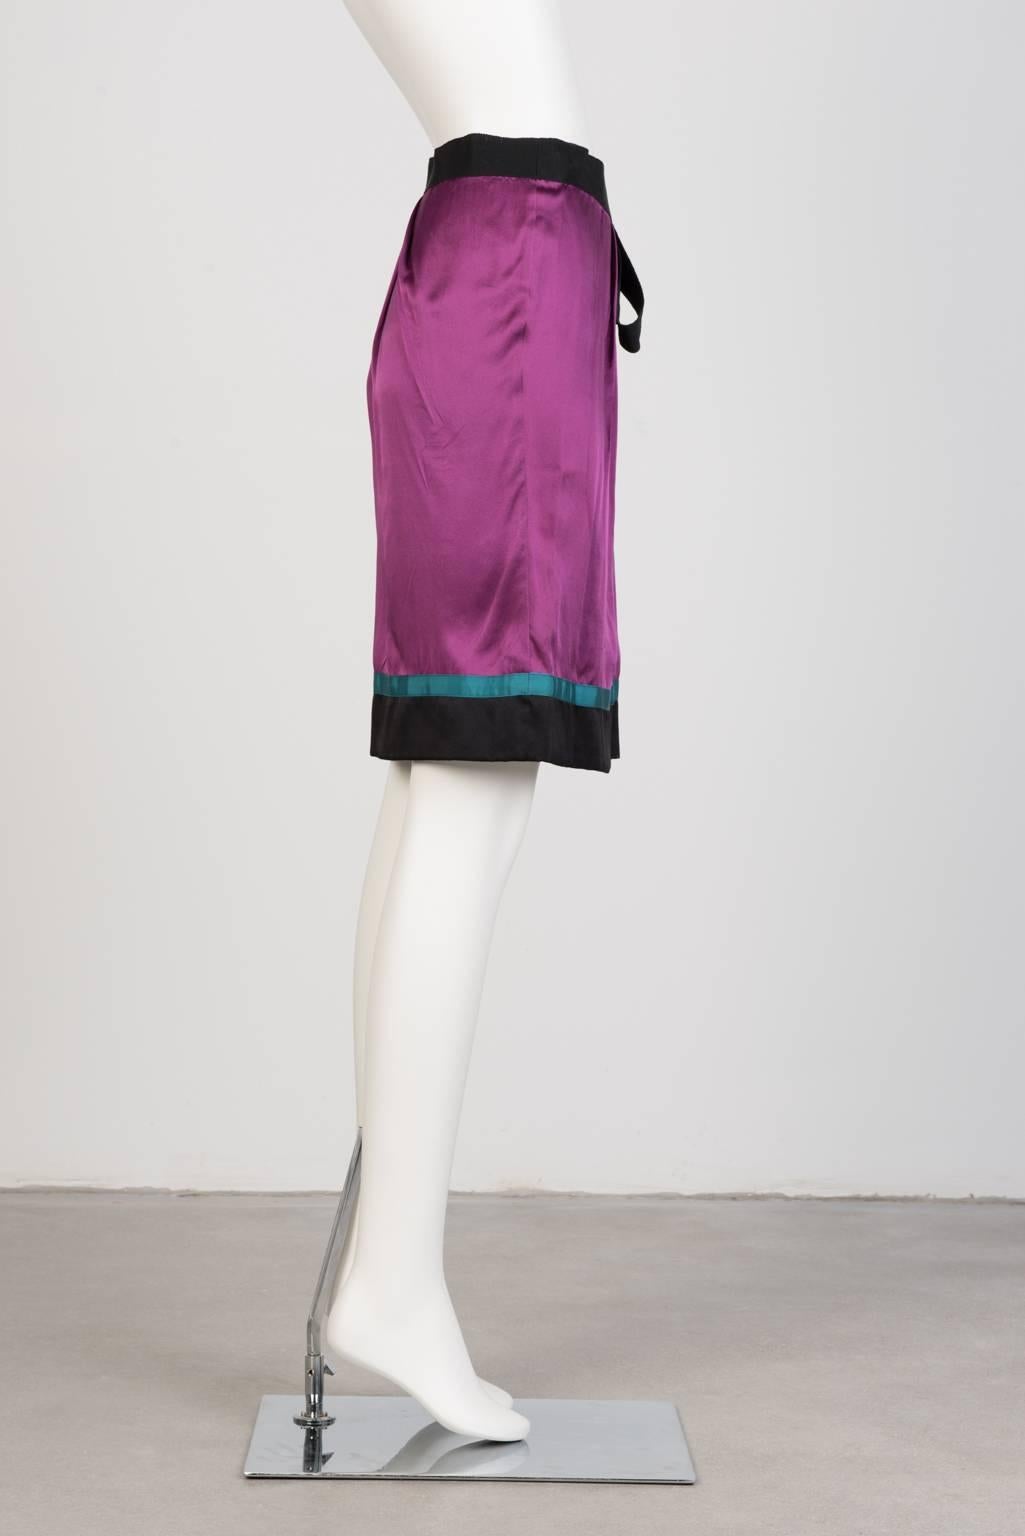 Philosophy Silk Wrap Skirt In New Condition For Sale In Xiamen, Fujian